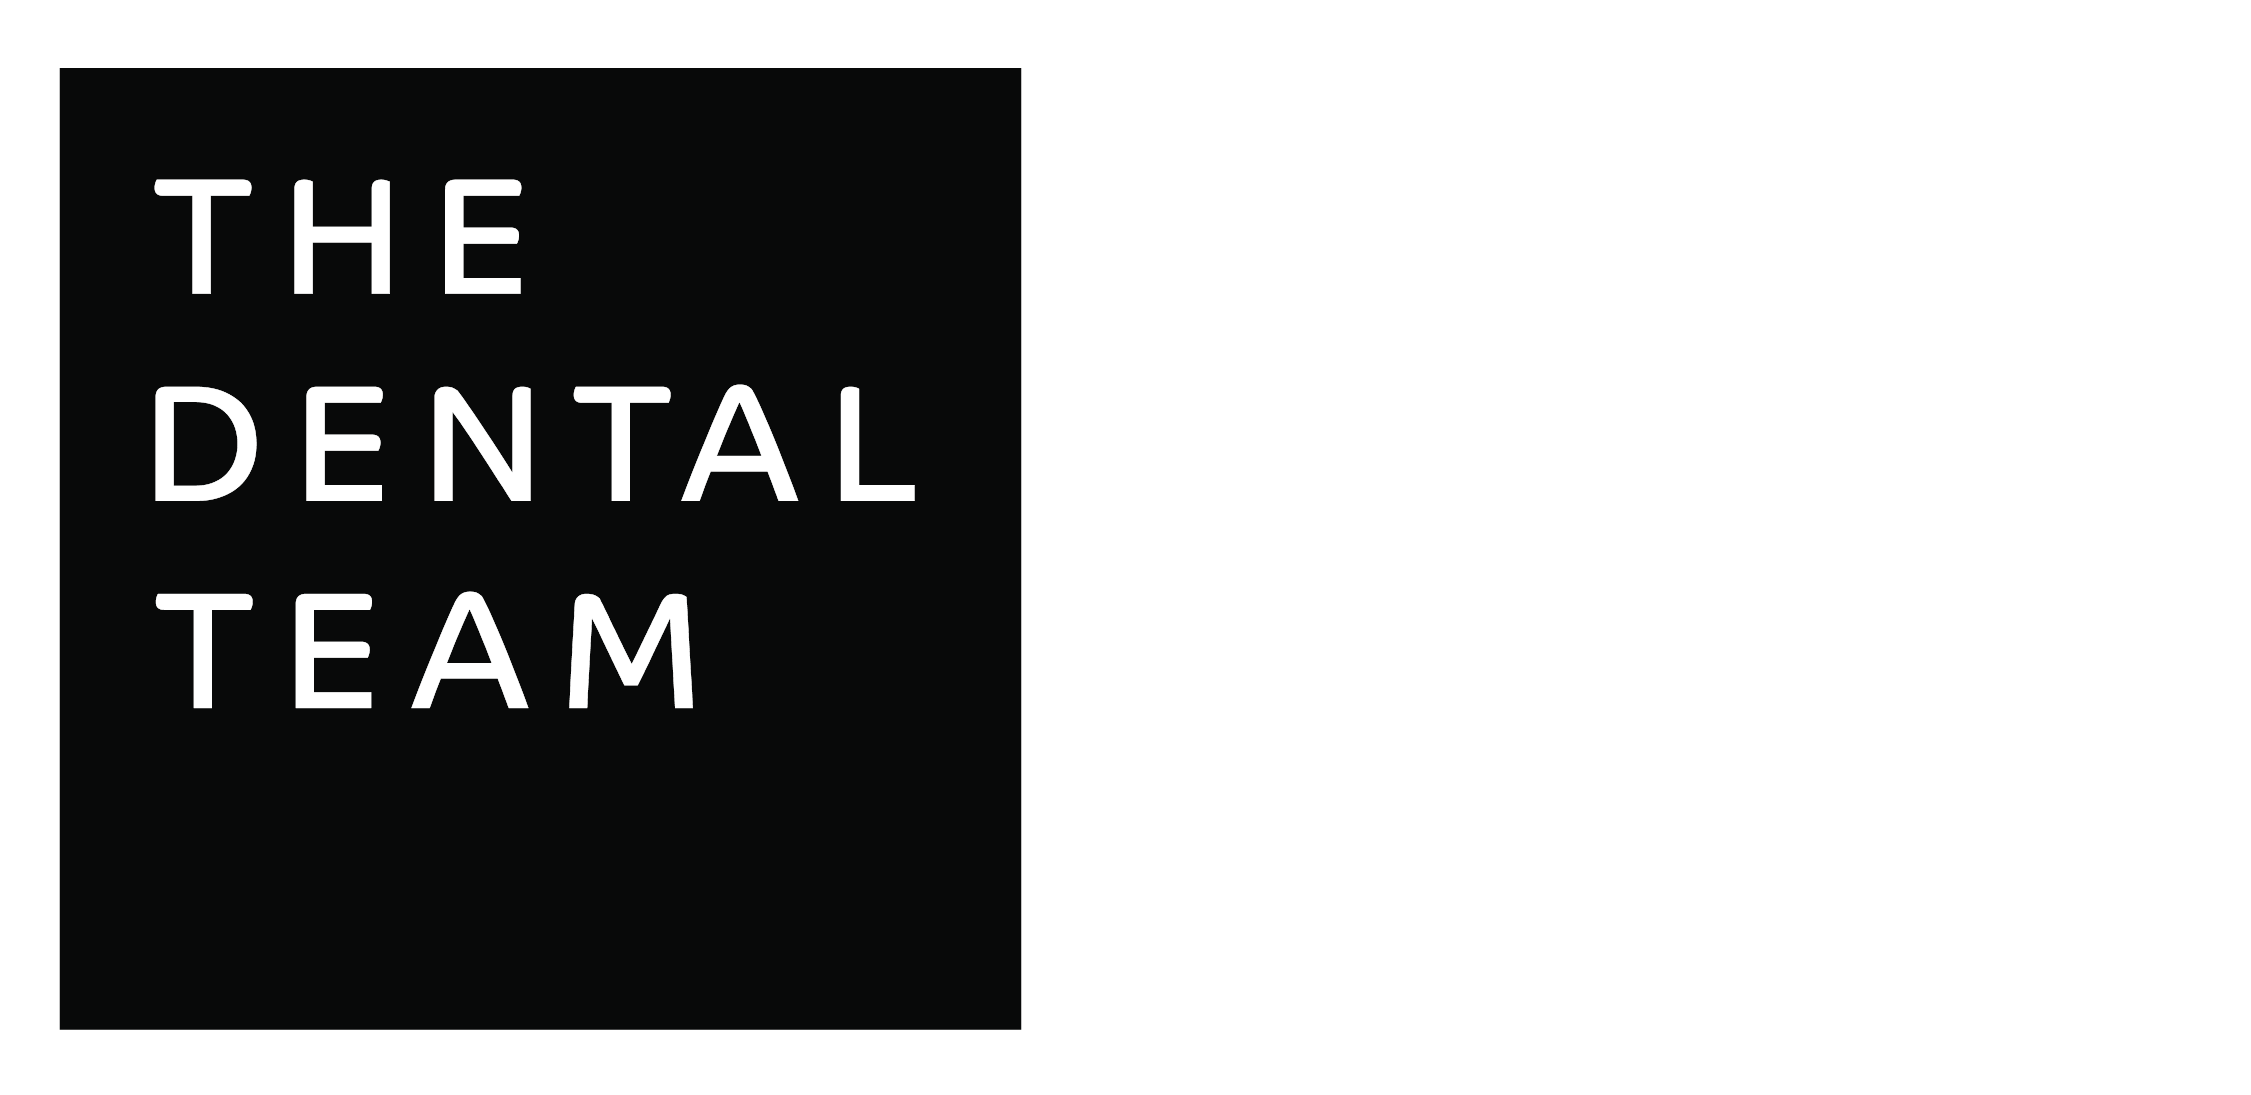 The Dental Team Group Education Centre Logo